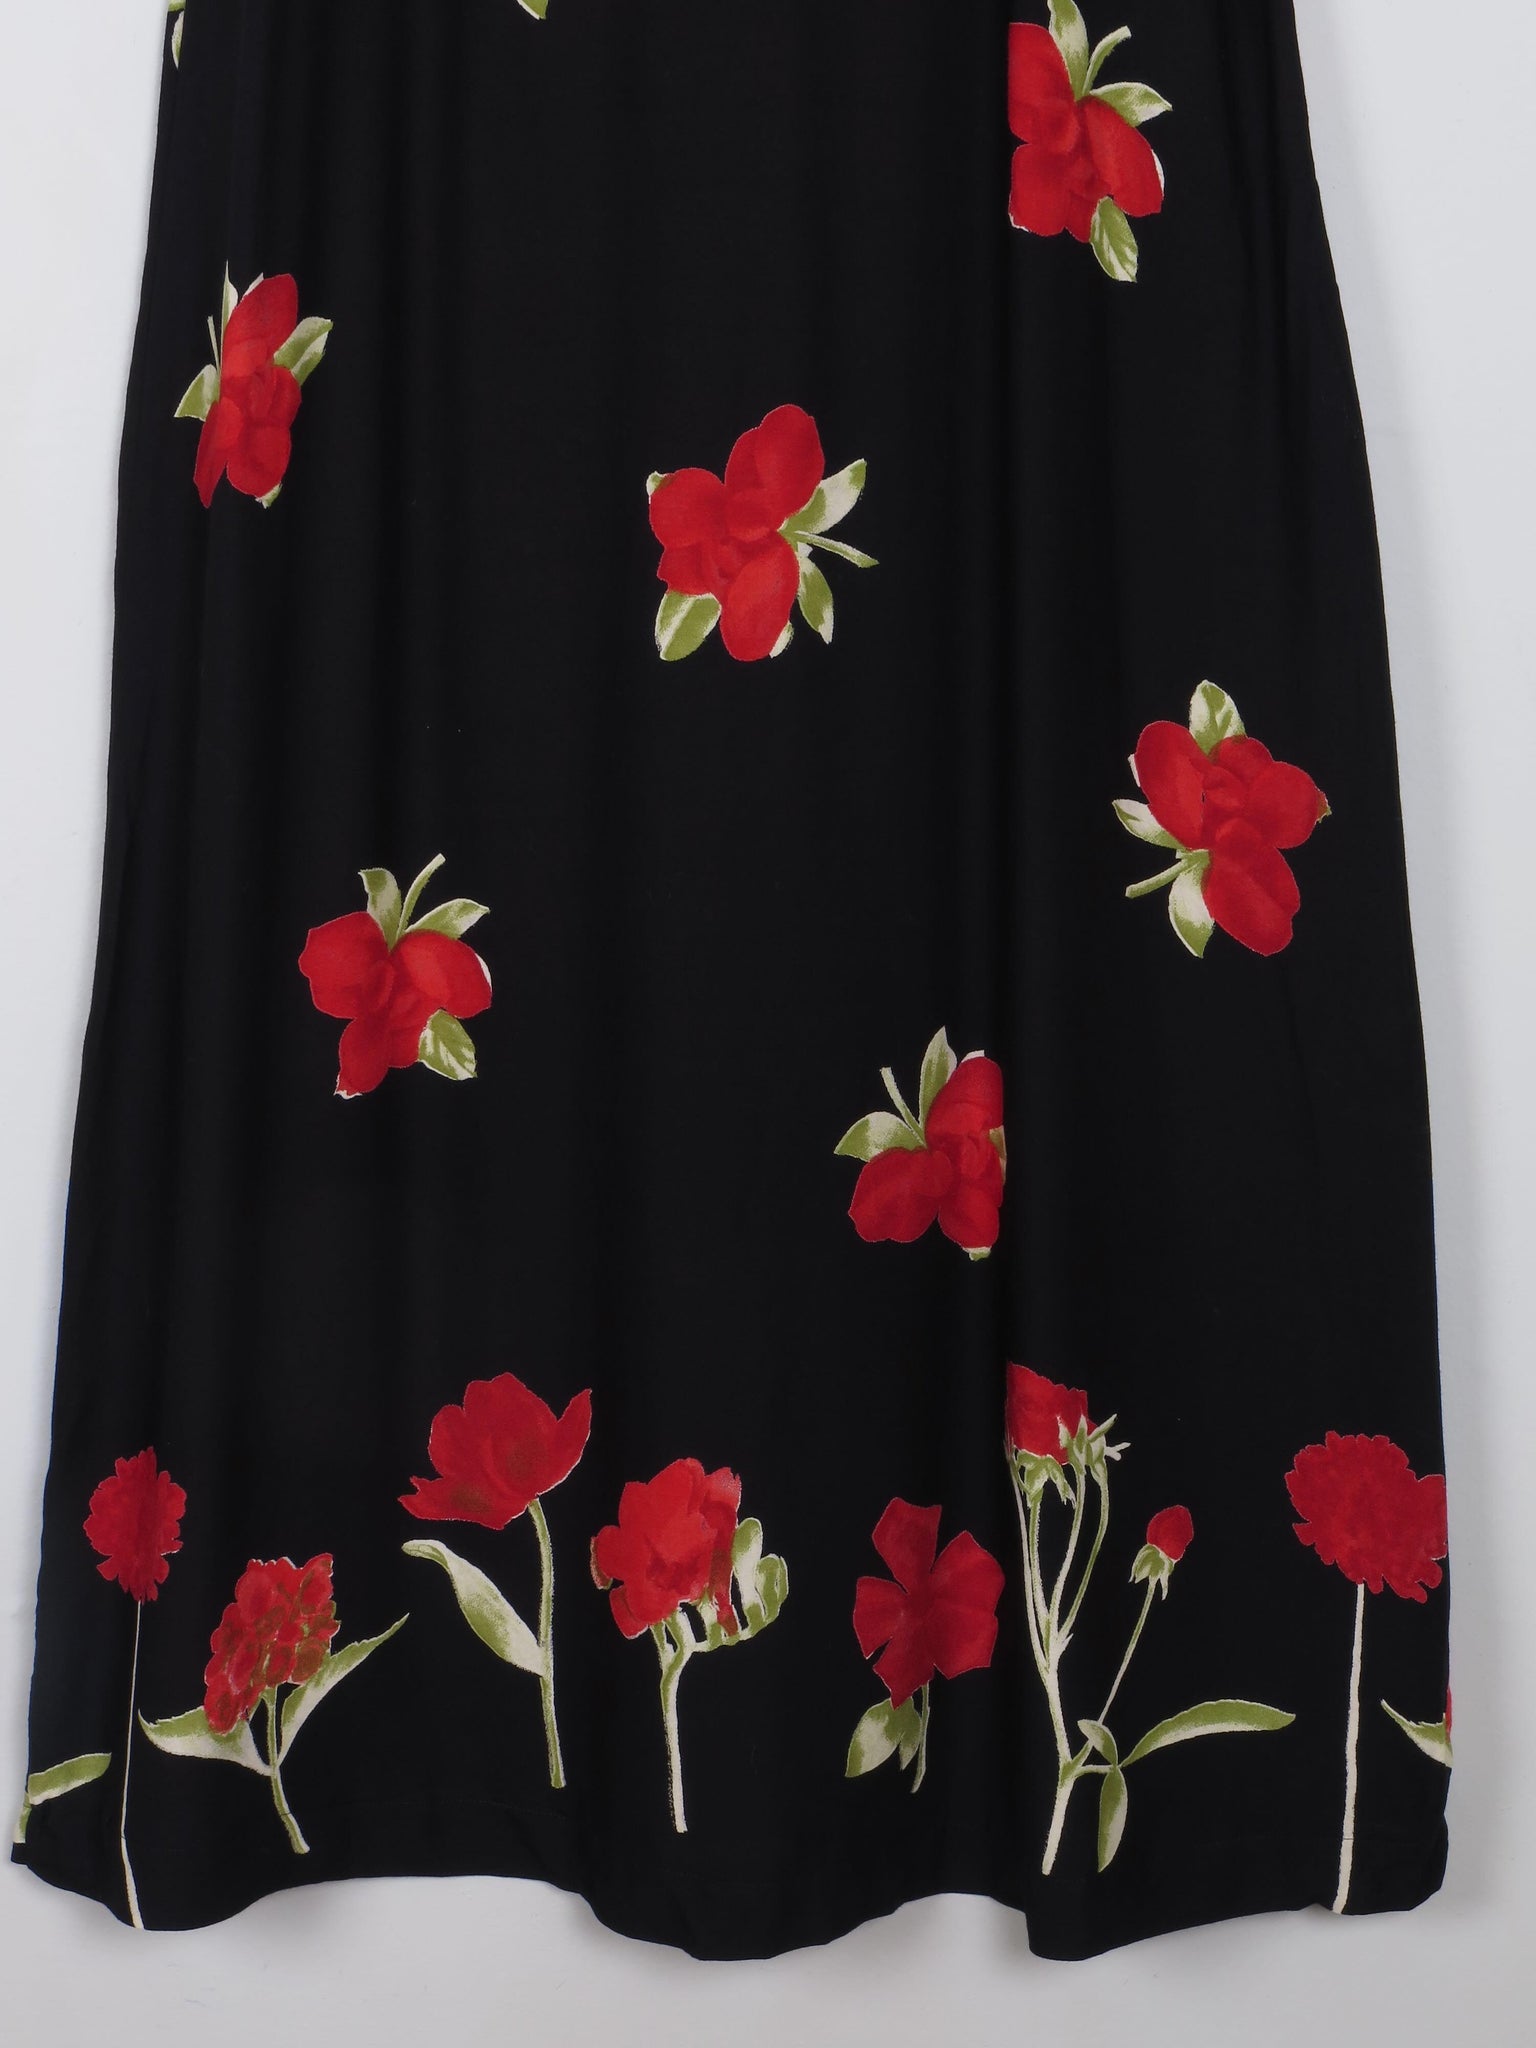 Printed Vintage Dress Black With Floral Print M/L - The Harlequin